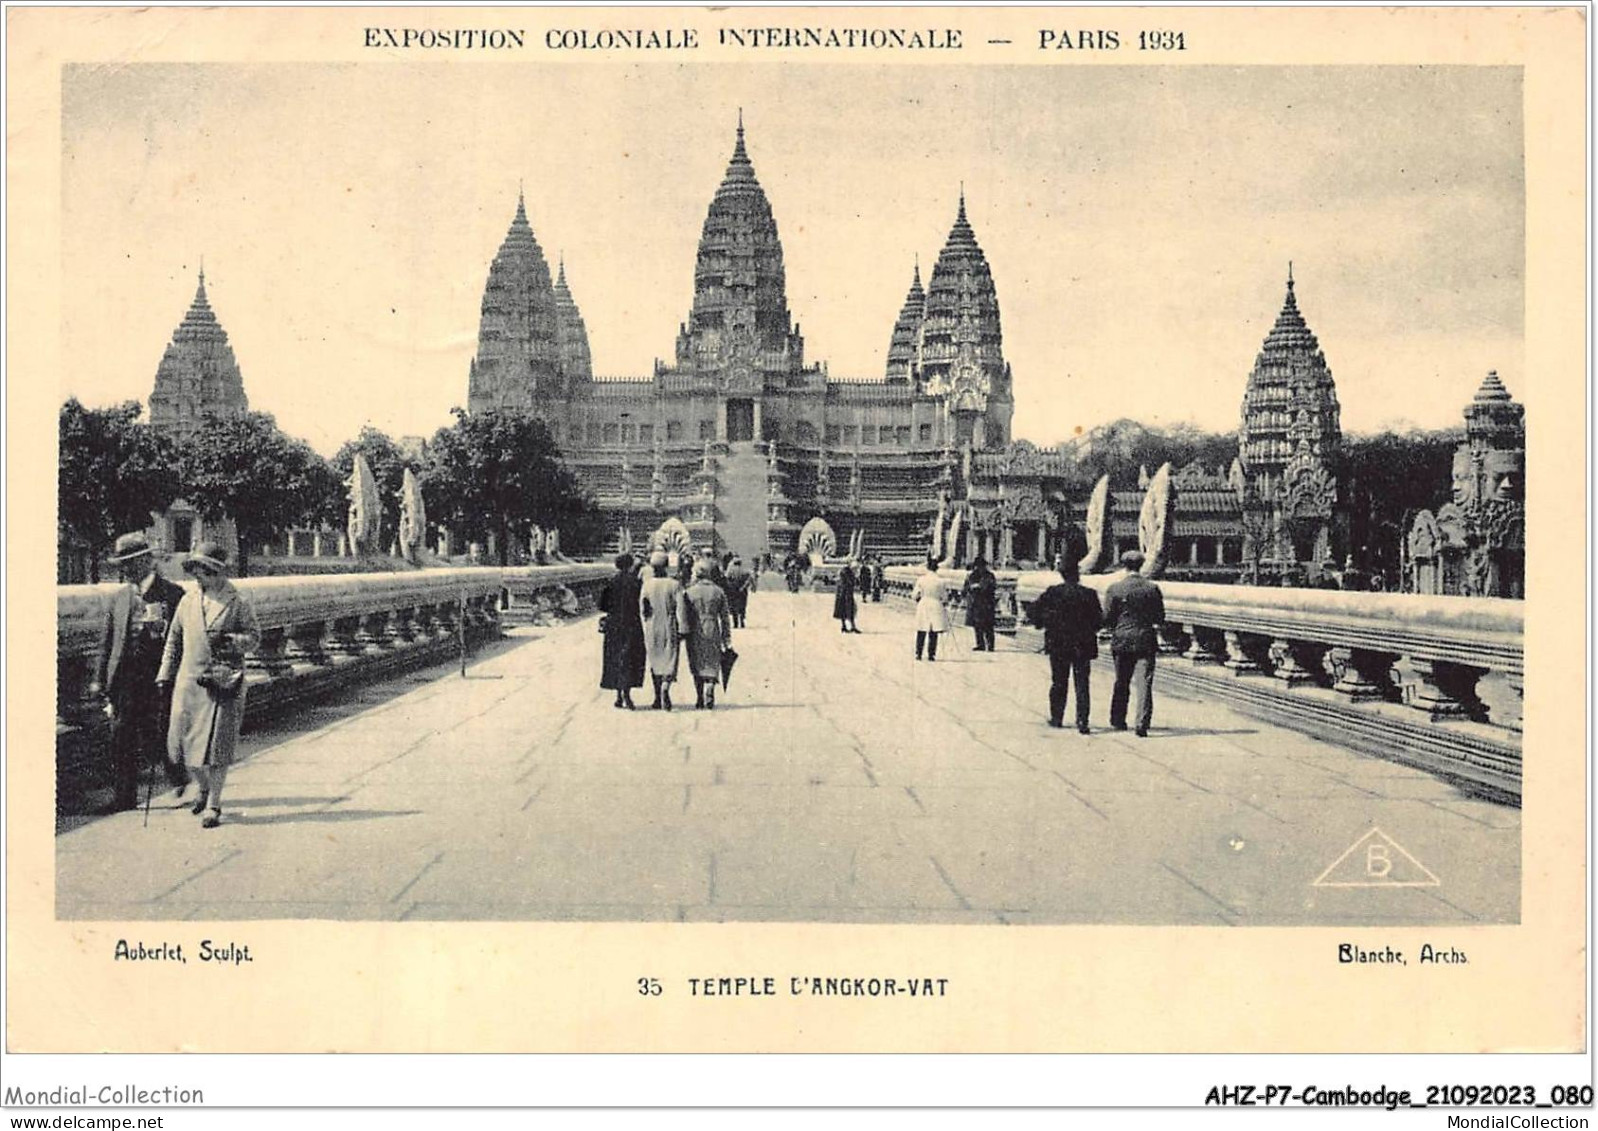 AHZP7-CAMBODGE-0636 - EXPOSITION COLONIALE INTERNATIONALE - PARIS 1931 - TEMPLE D'ANGKOR-VAT - Cambodia